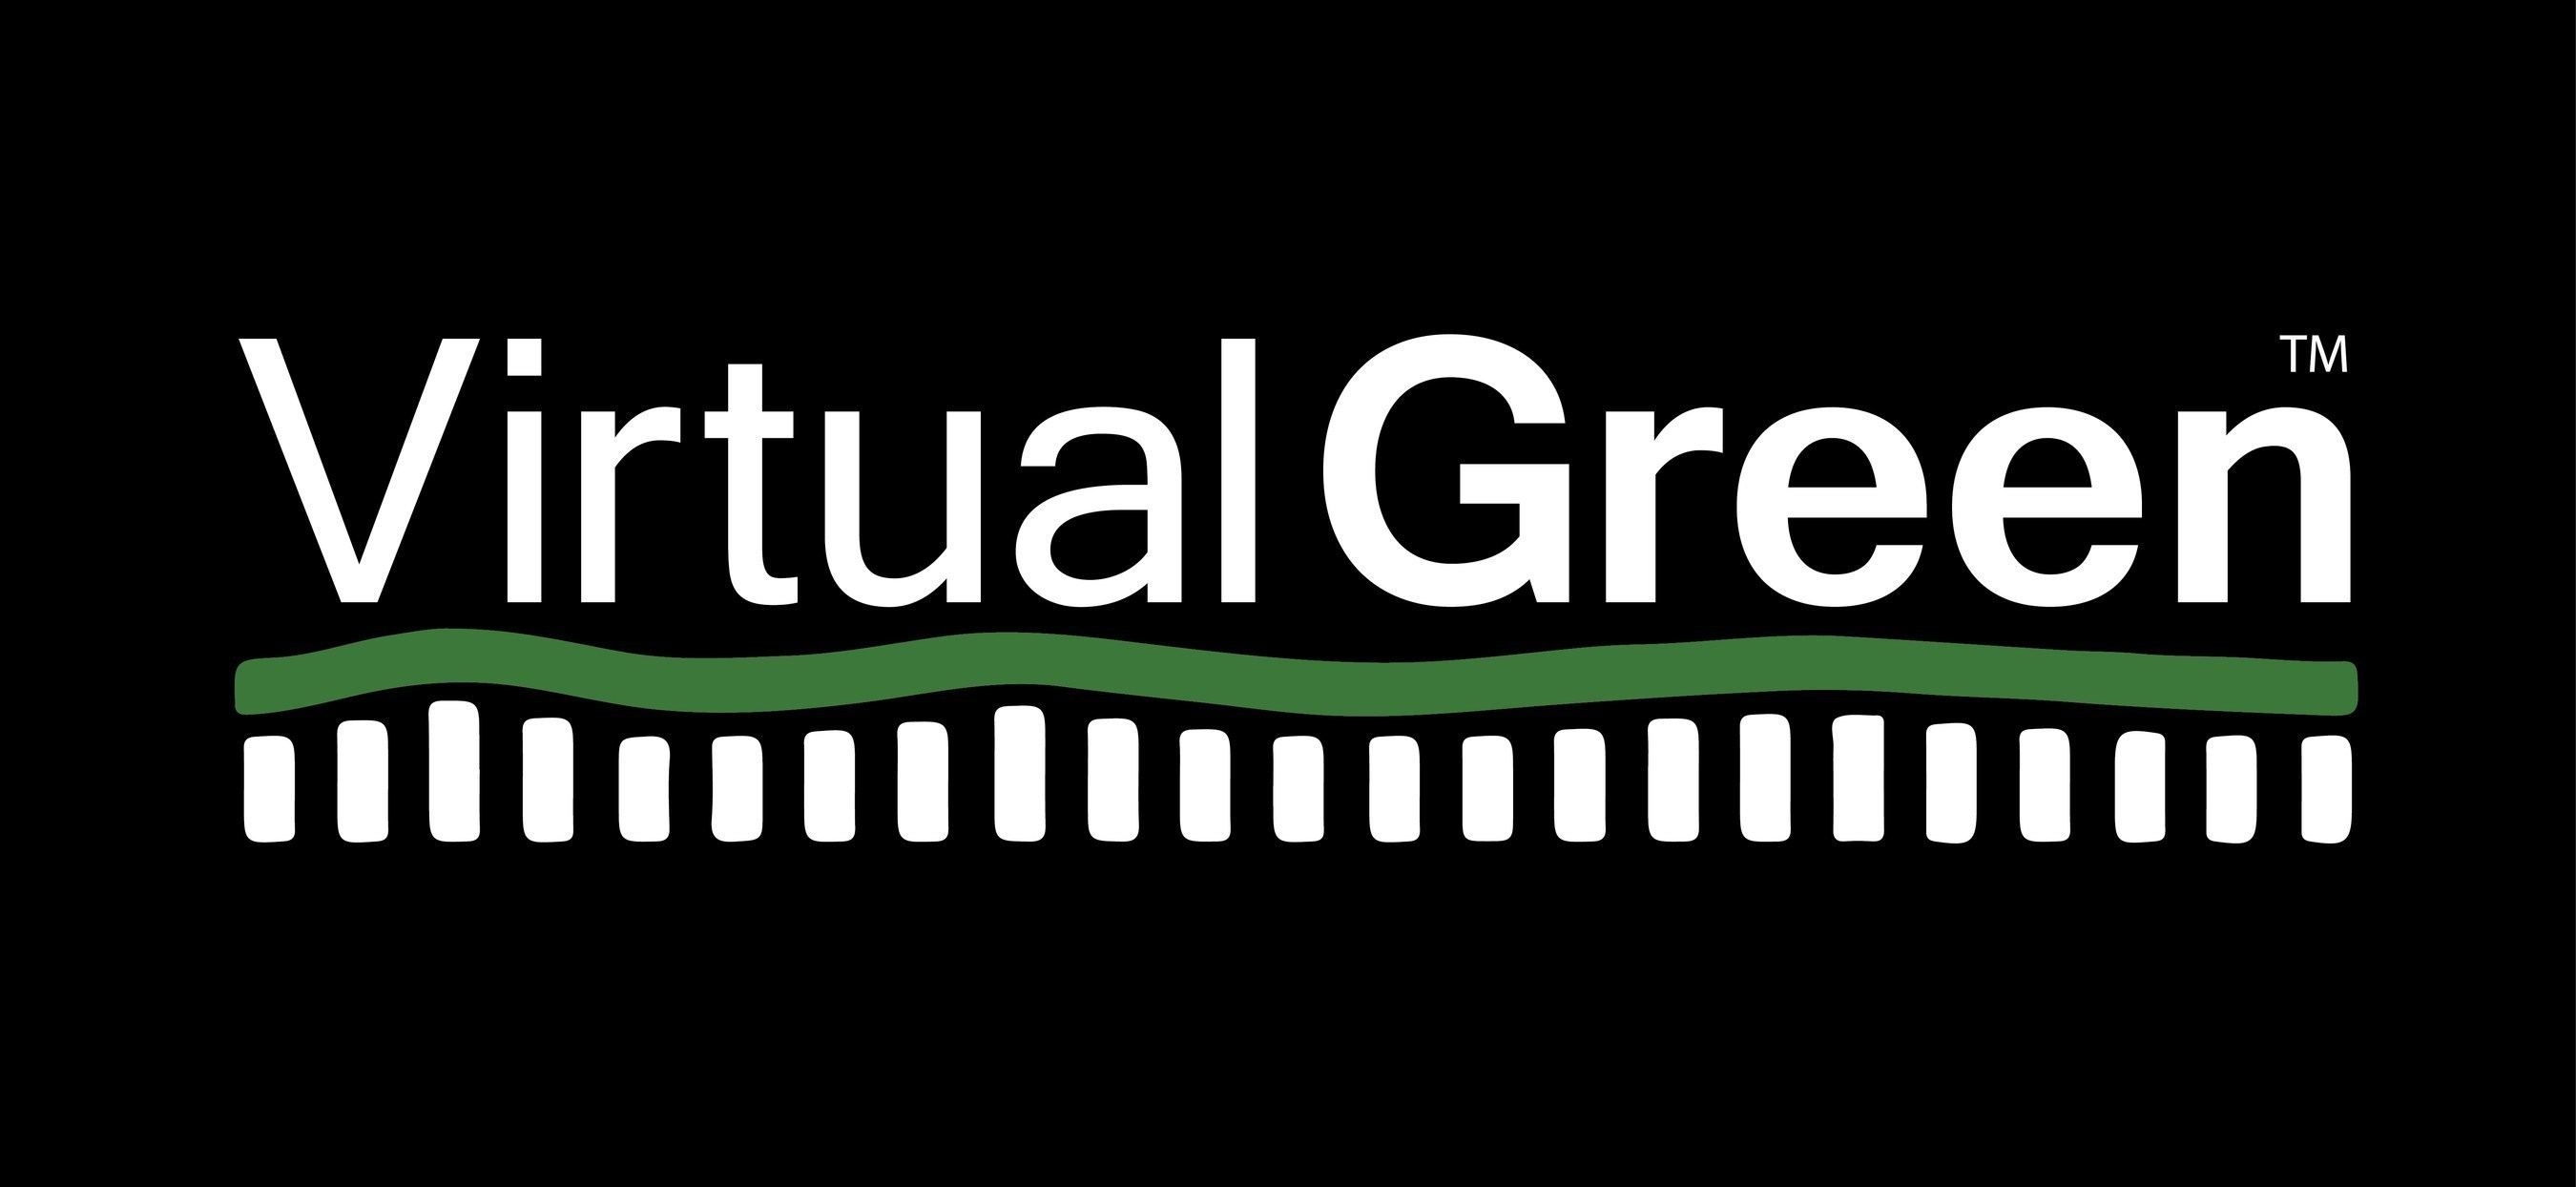 Virtual Green - The future of putting for golf simulators